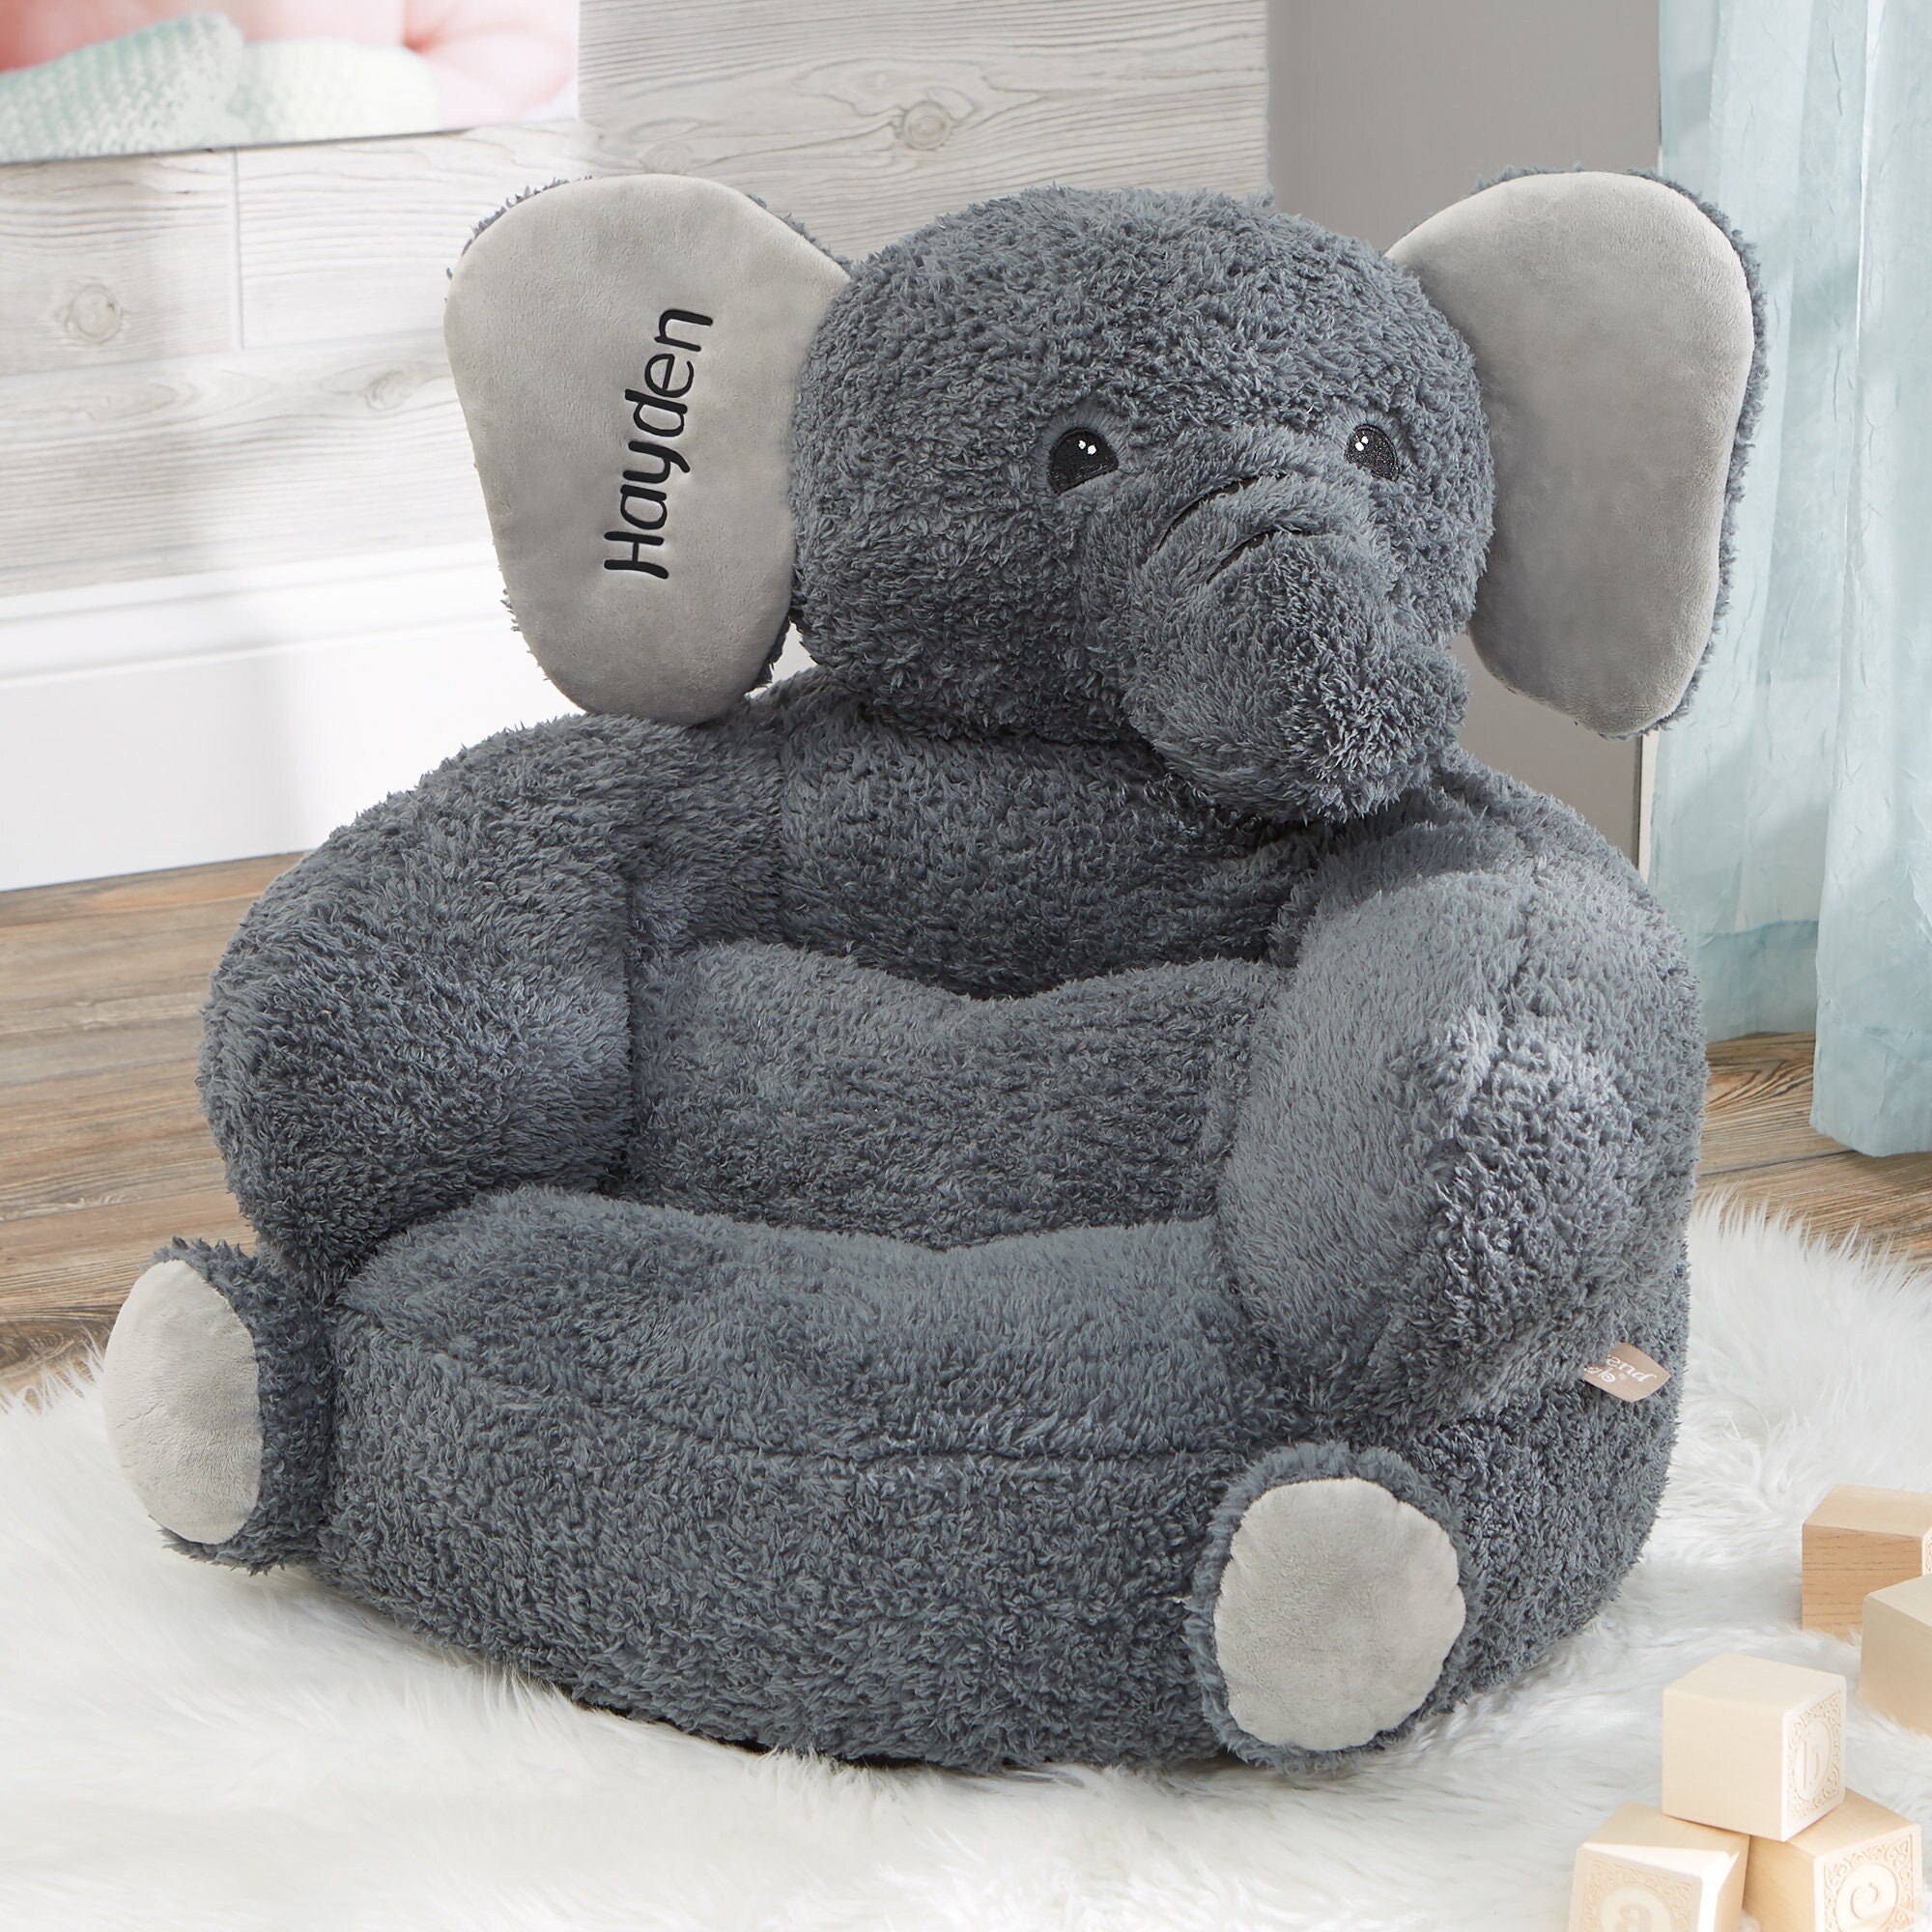 Bear Childrens Armchair Grey BrownBear Seat Sofa Chair Baby Snuggle Sofa Plush Toy Bedroom Playroom 